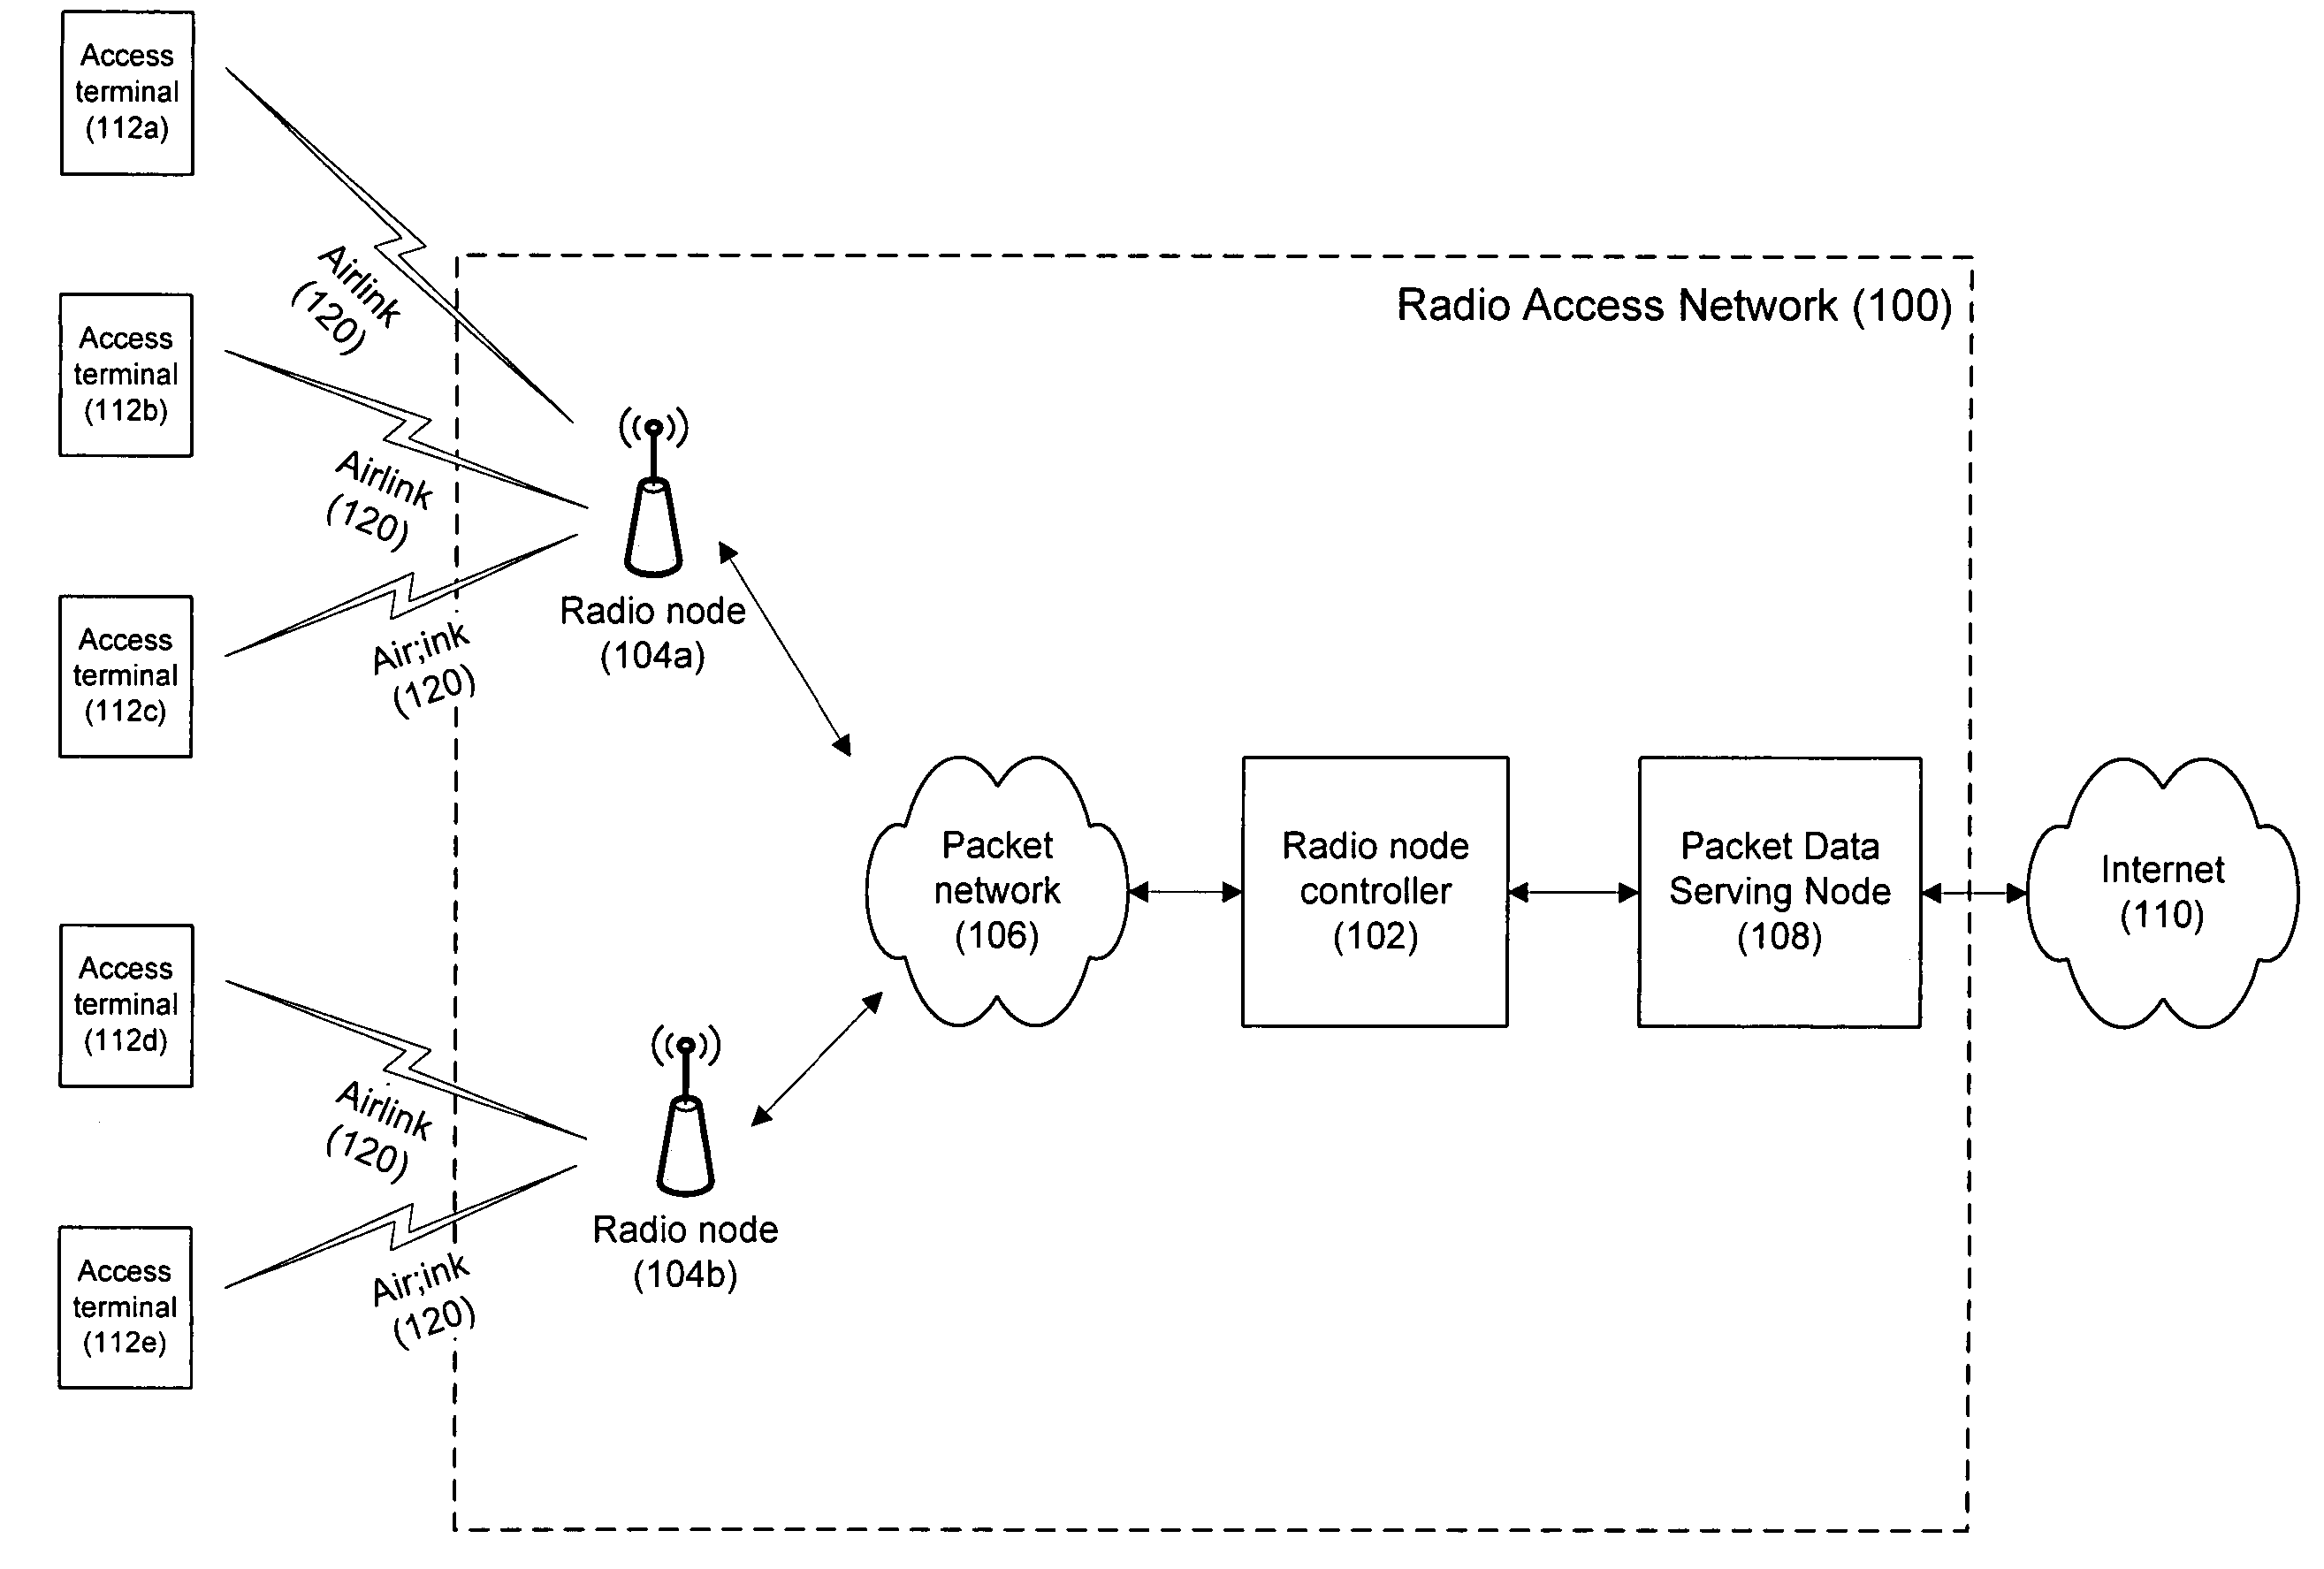 Resource allocation in a radio access network